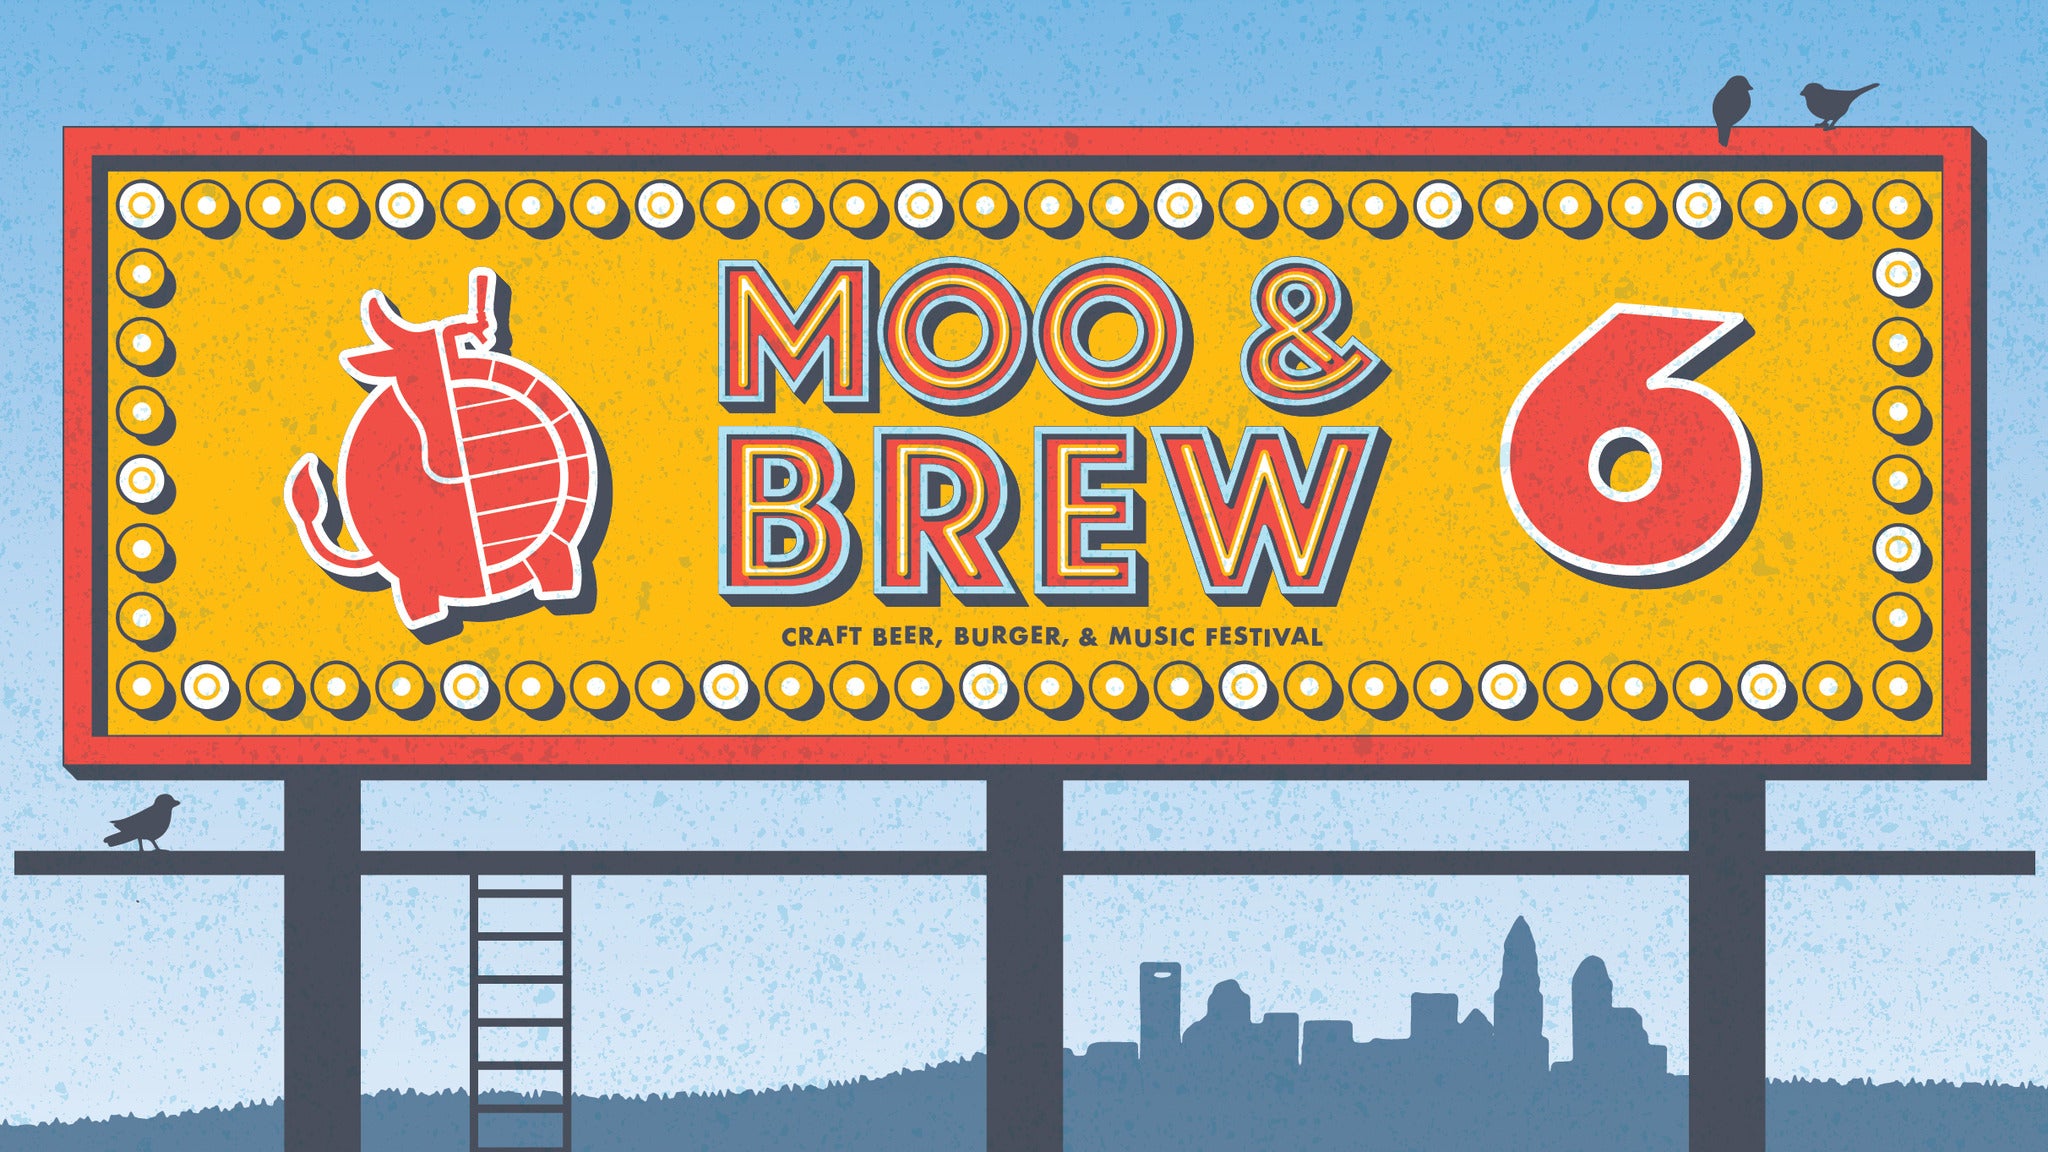 Moo & Brew Craft Beer & Music Festival Billets Dates d'événements et